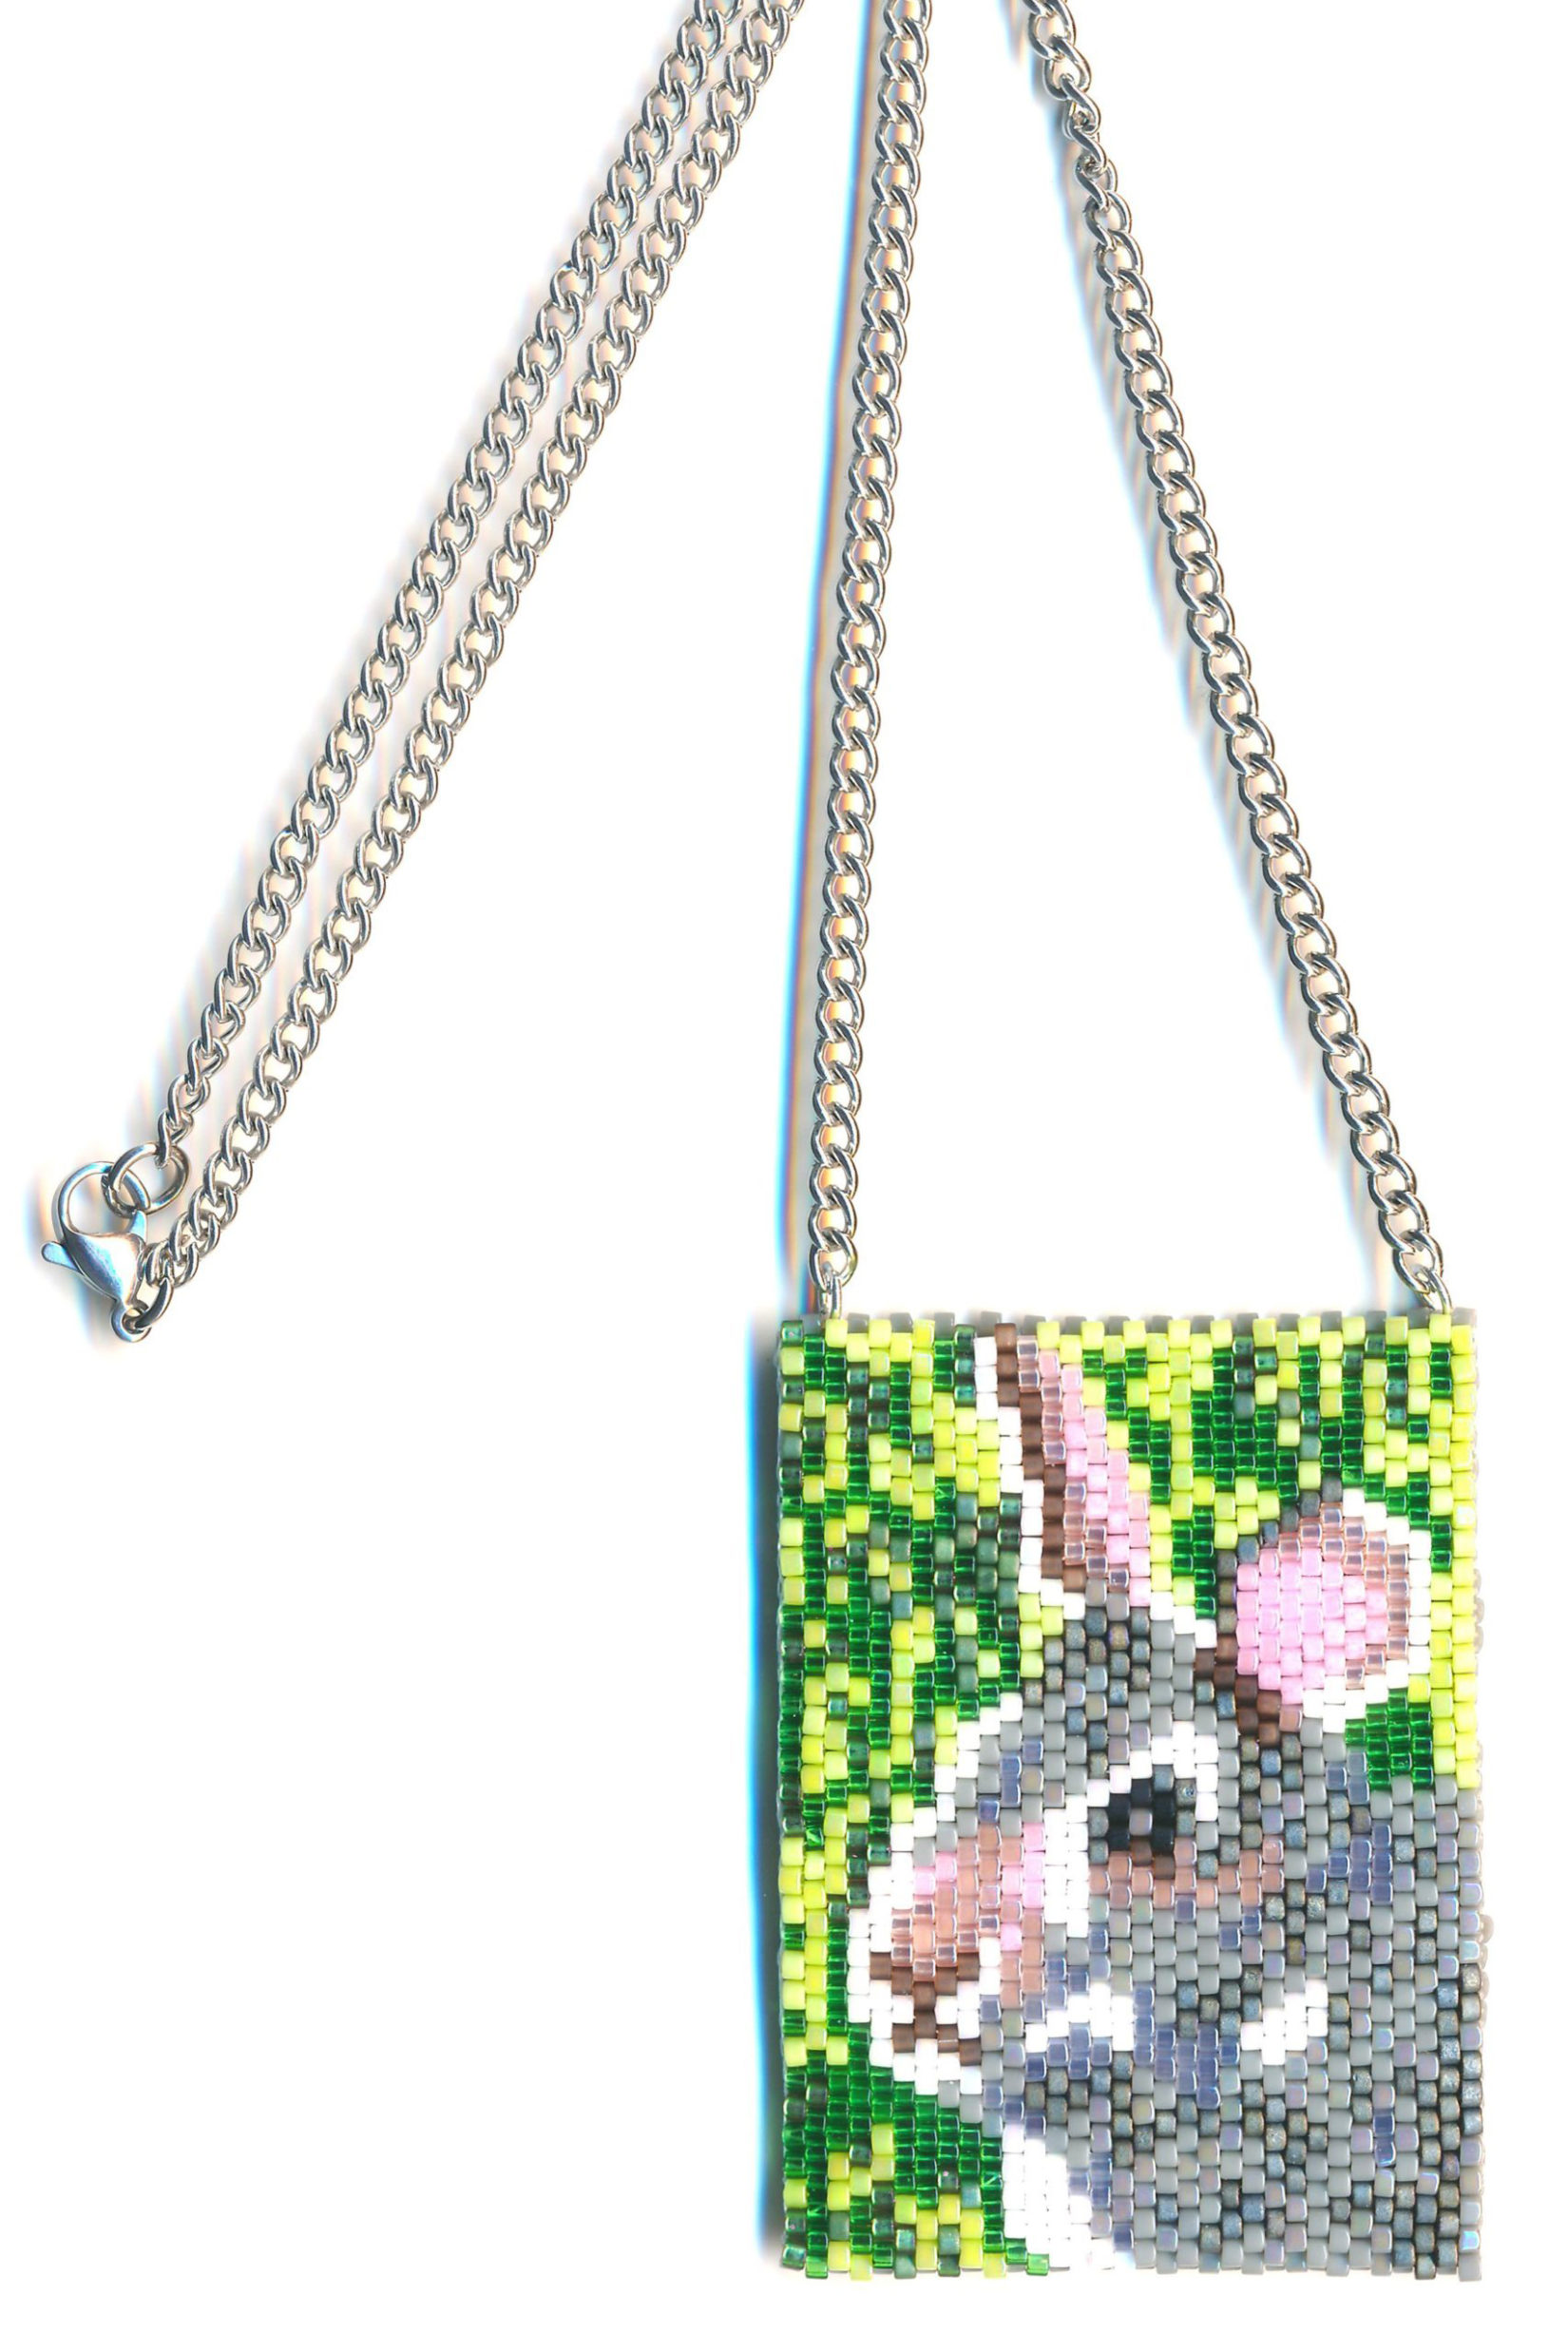 Bunny Rabbit Delica Beaded Necklace Mini Amulet Bag